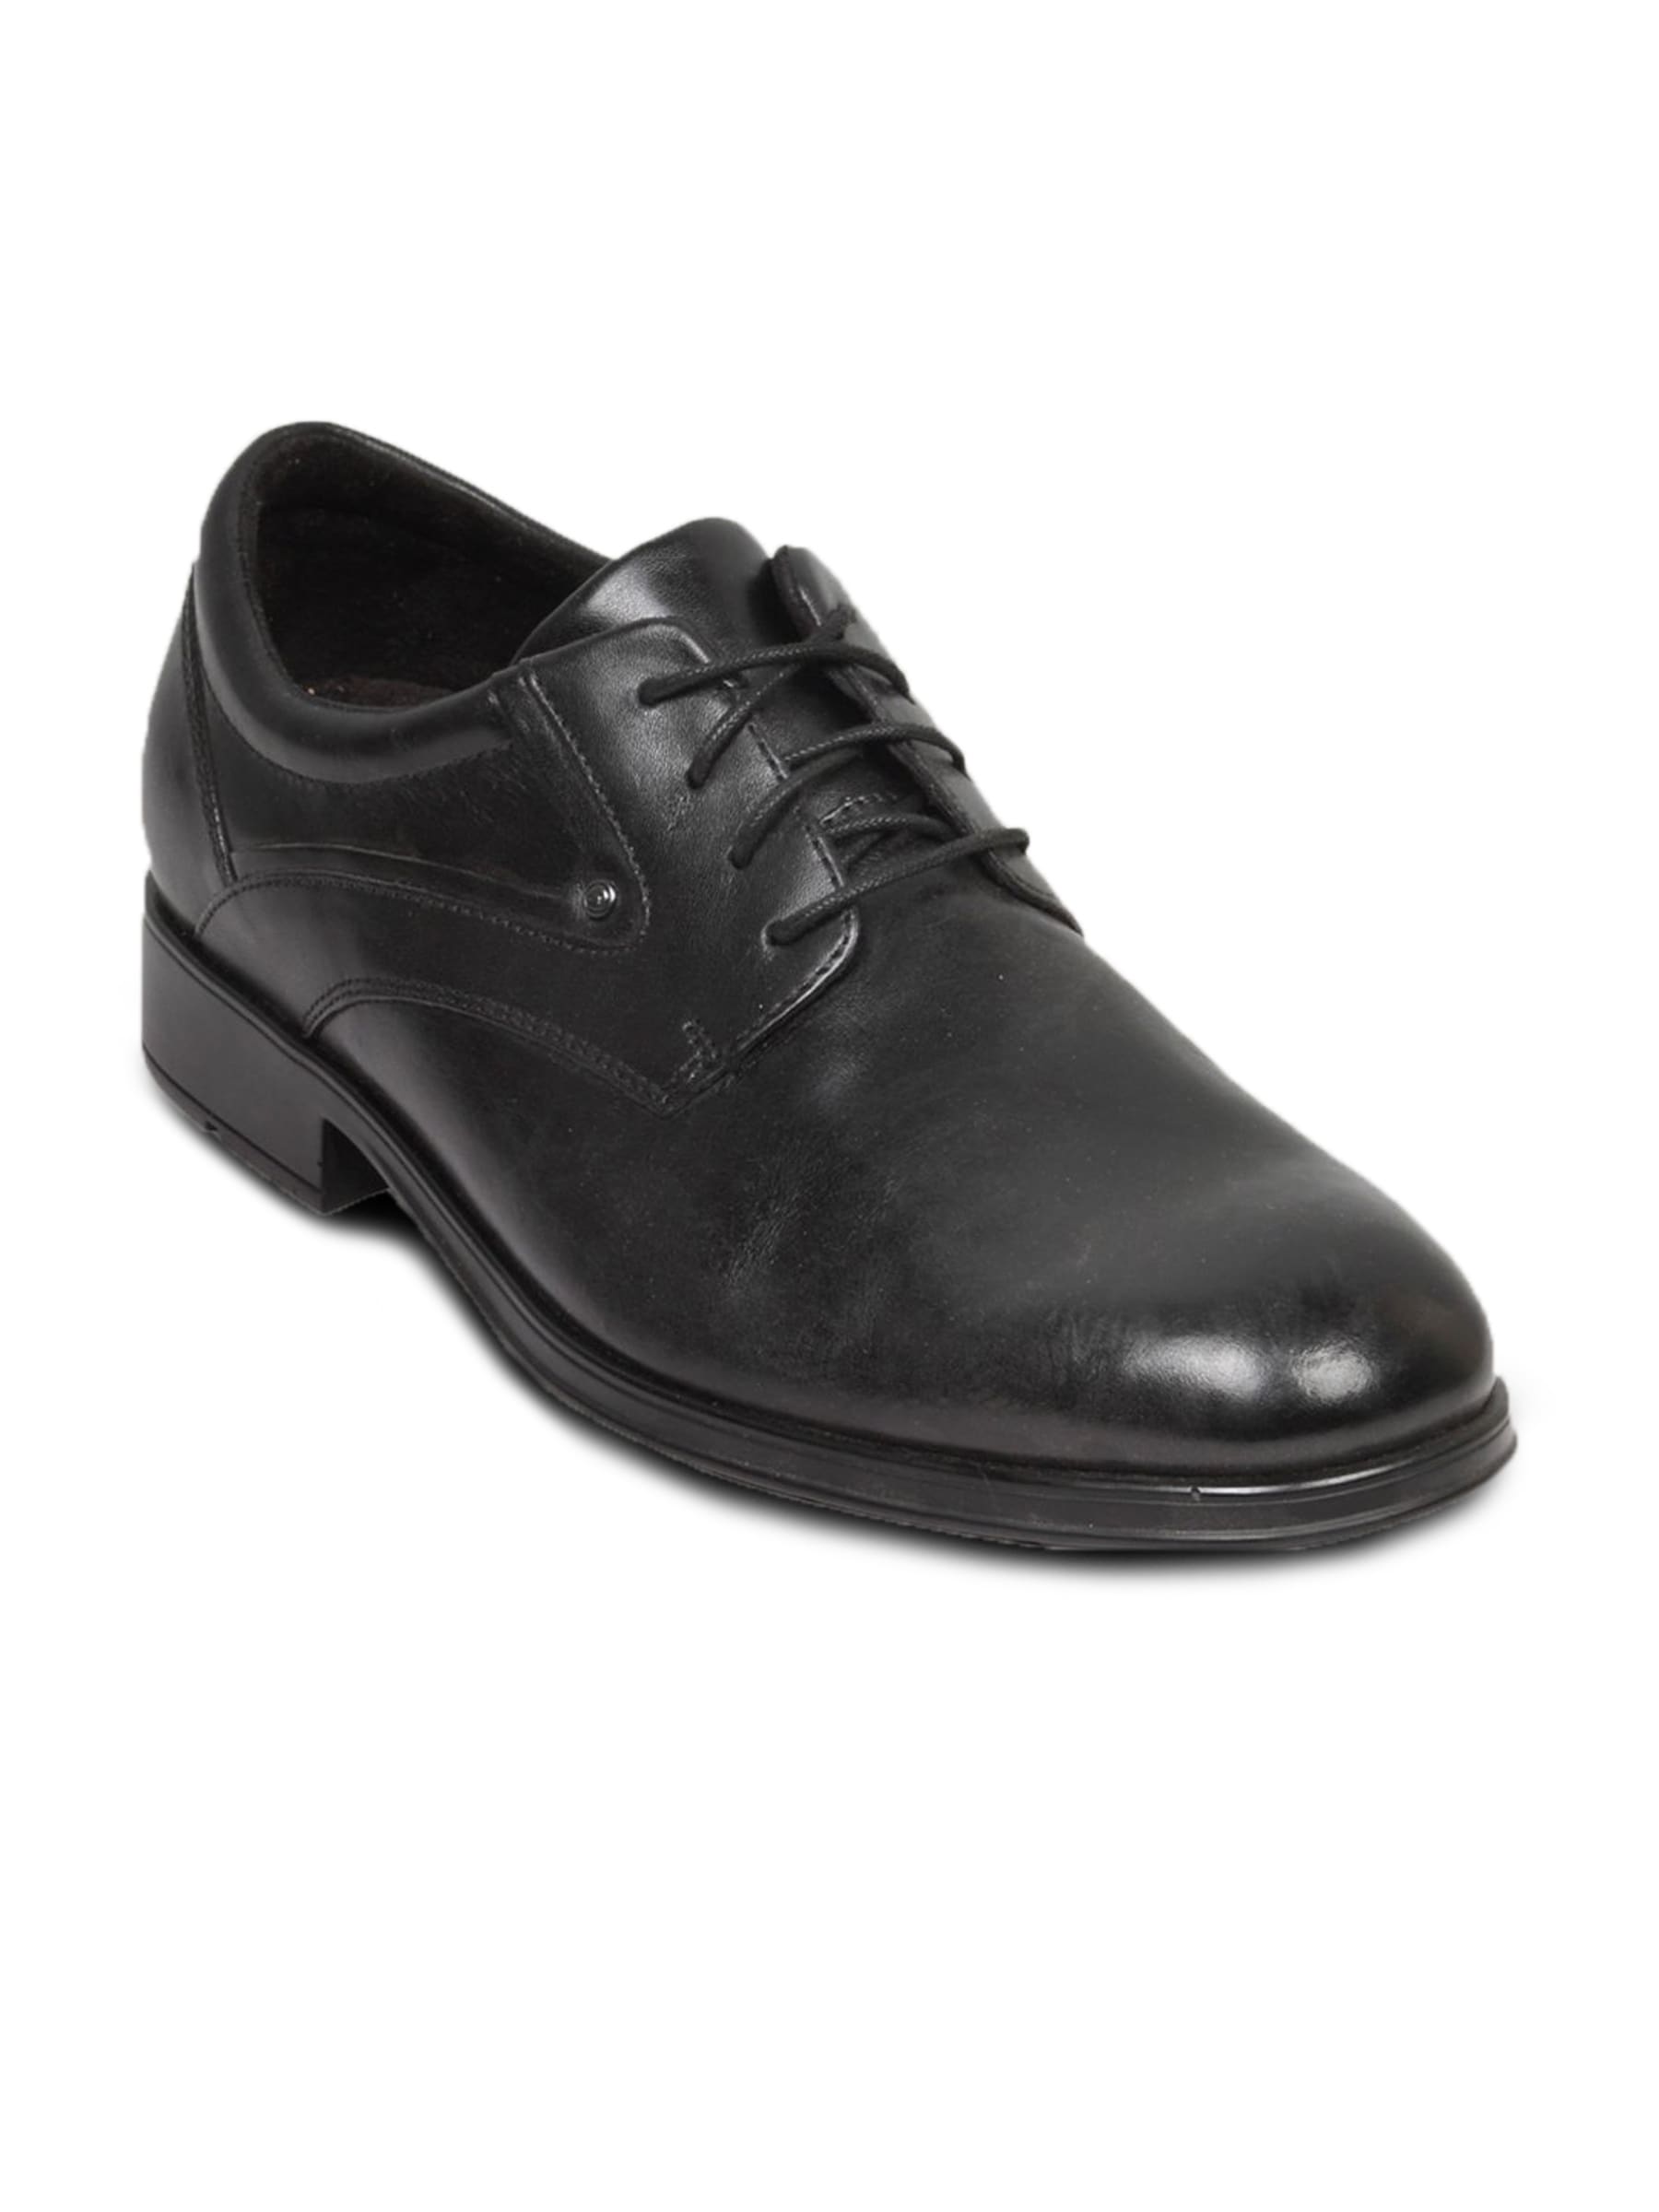 Rockport Men's Trinchero Black Shoe